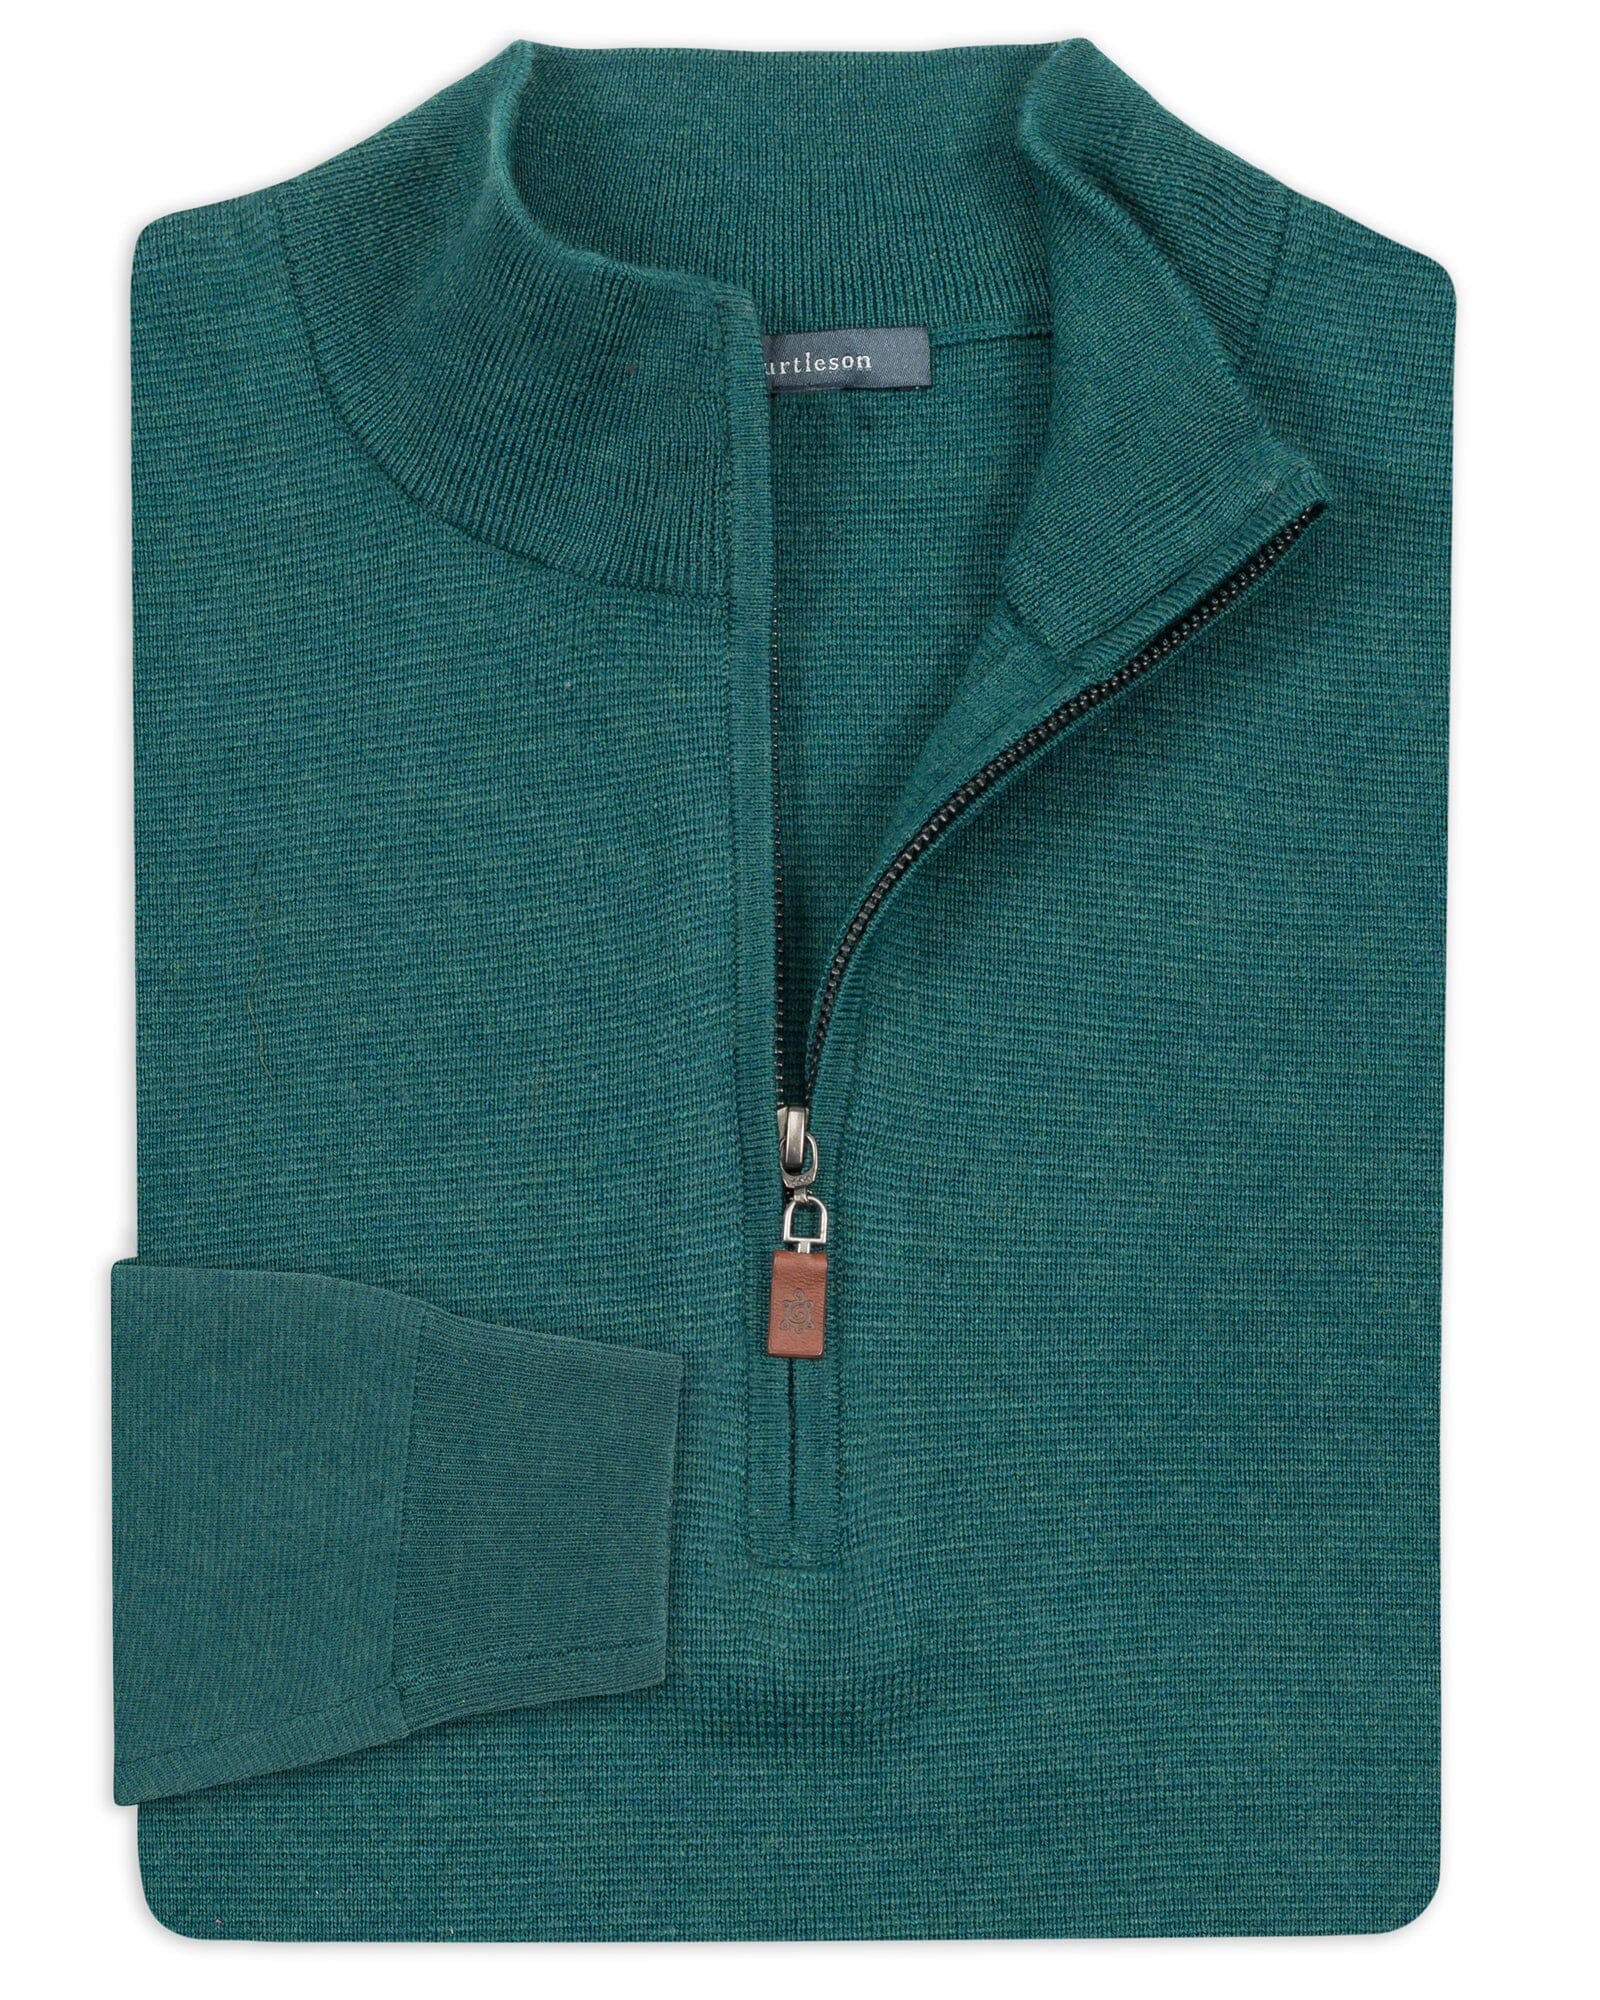 Extra Fine Merino Milano-Stitch turtleson – Sweater Quarter-Zip